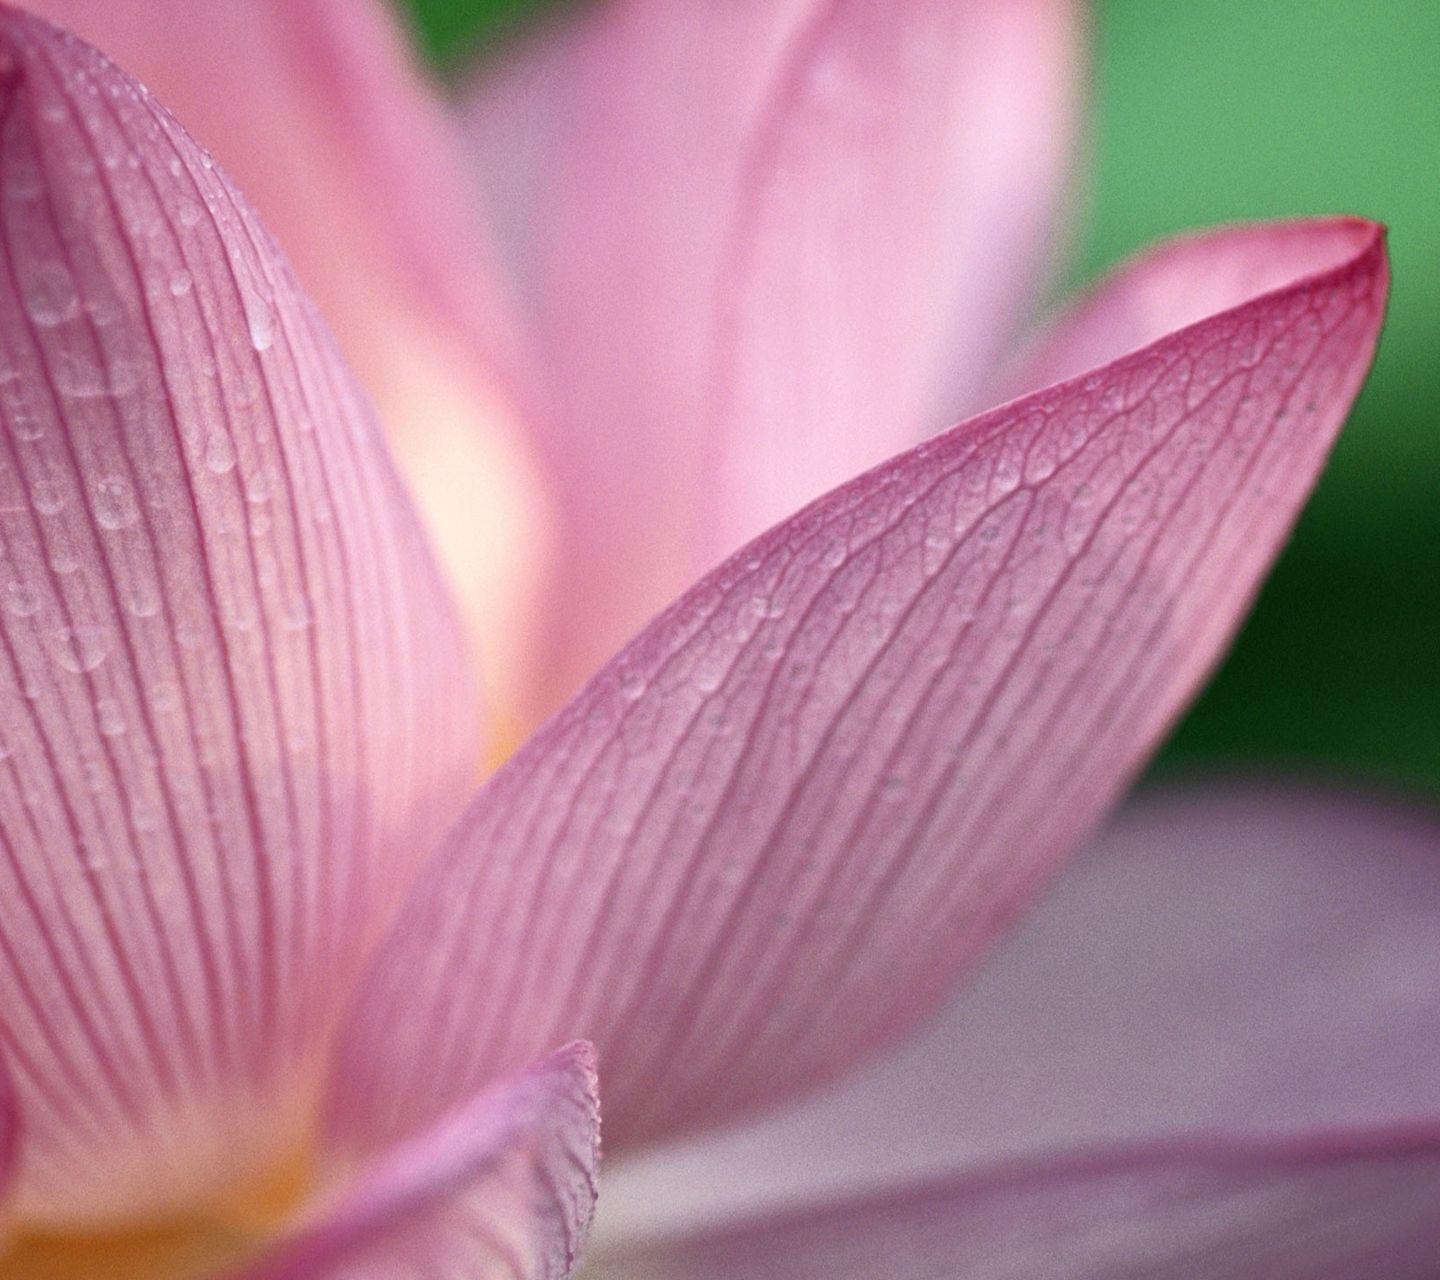 Galaxy S3 Wallpaper Lotus Flower